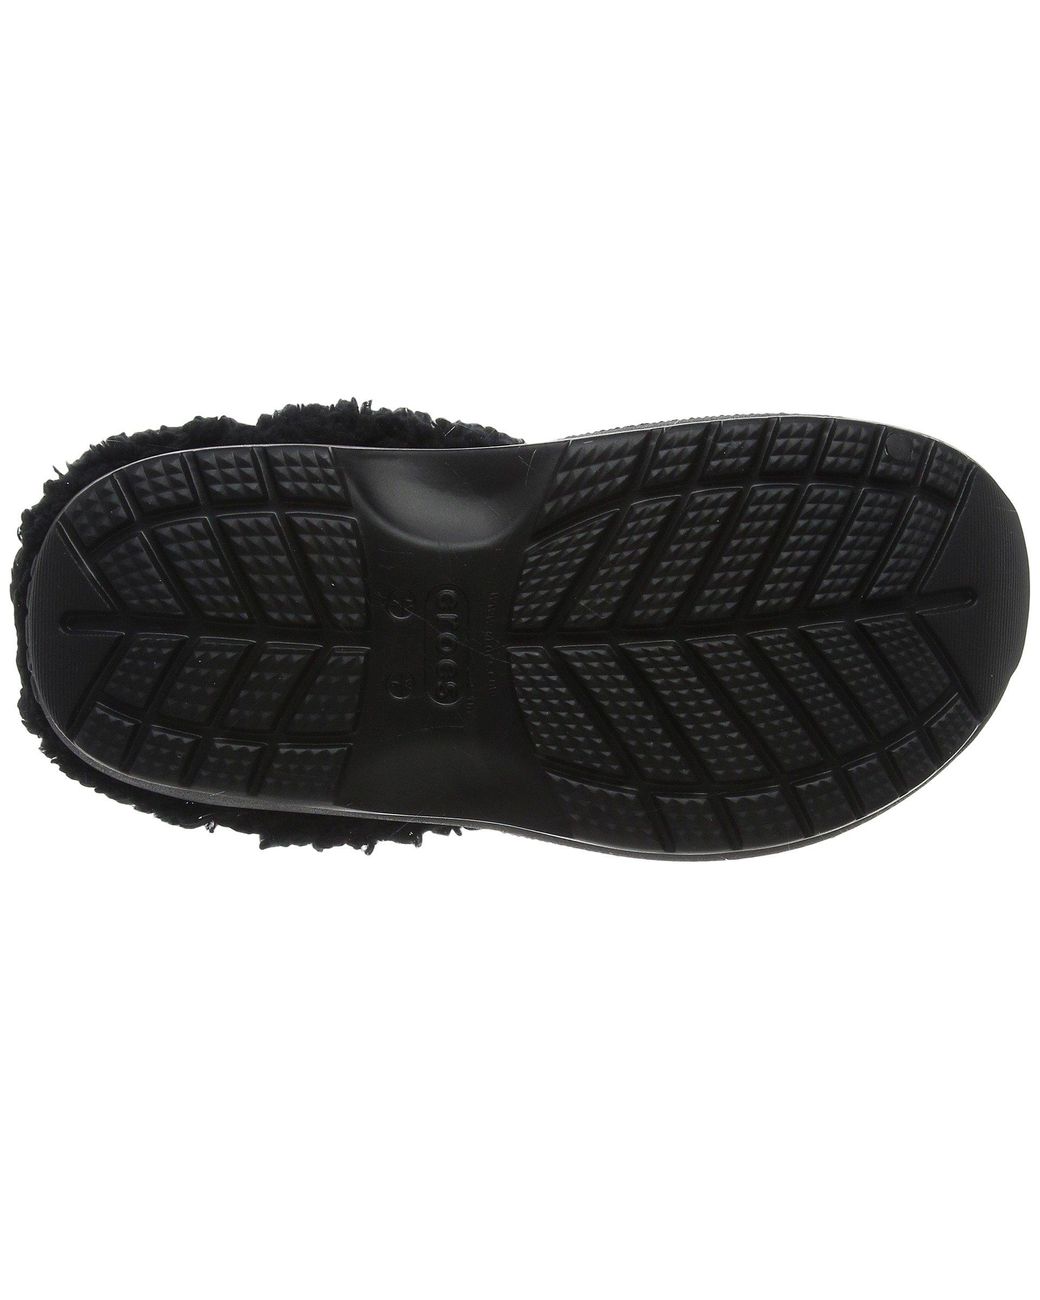 Crocs™ Blitzen Iii Clog in Black/Black (Black) - Save 46% - Lyst